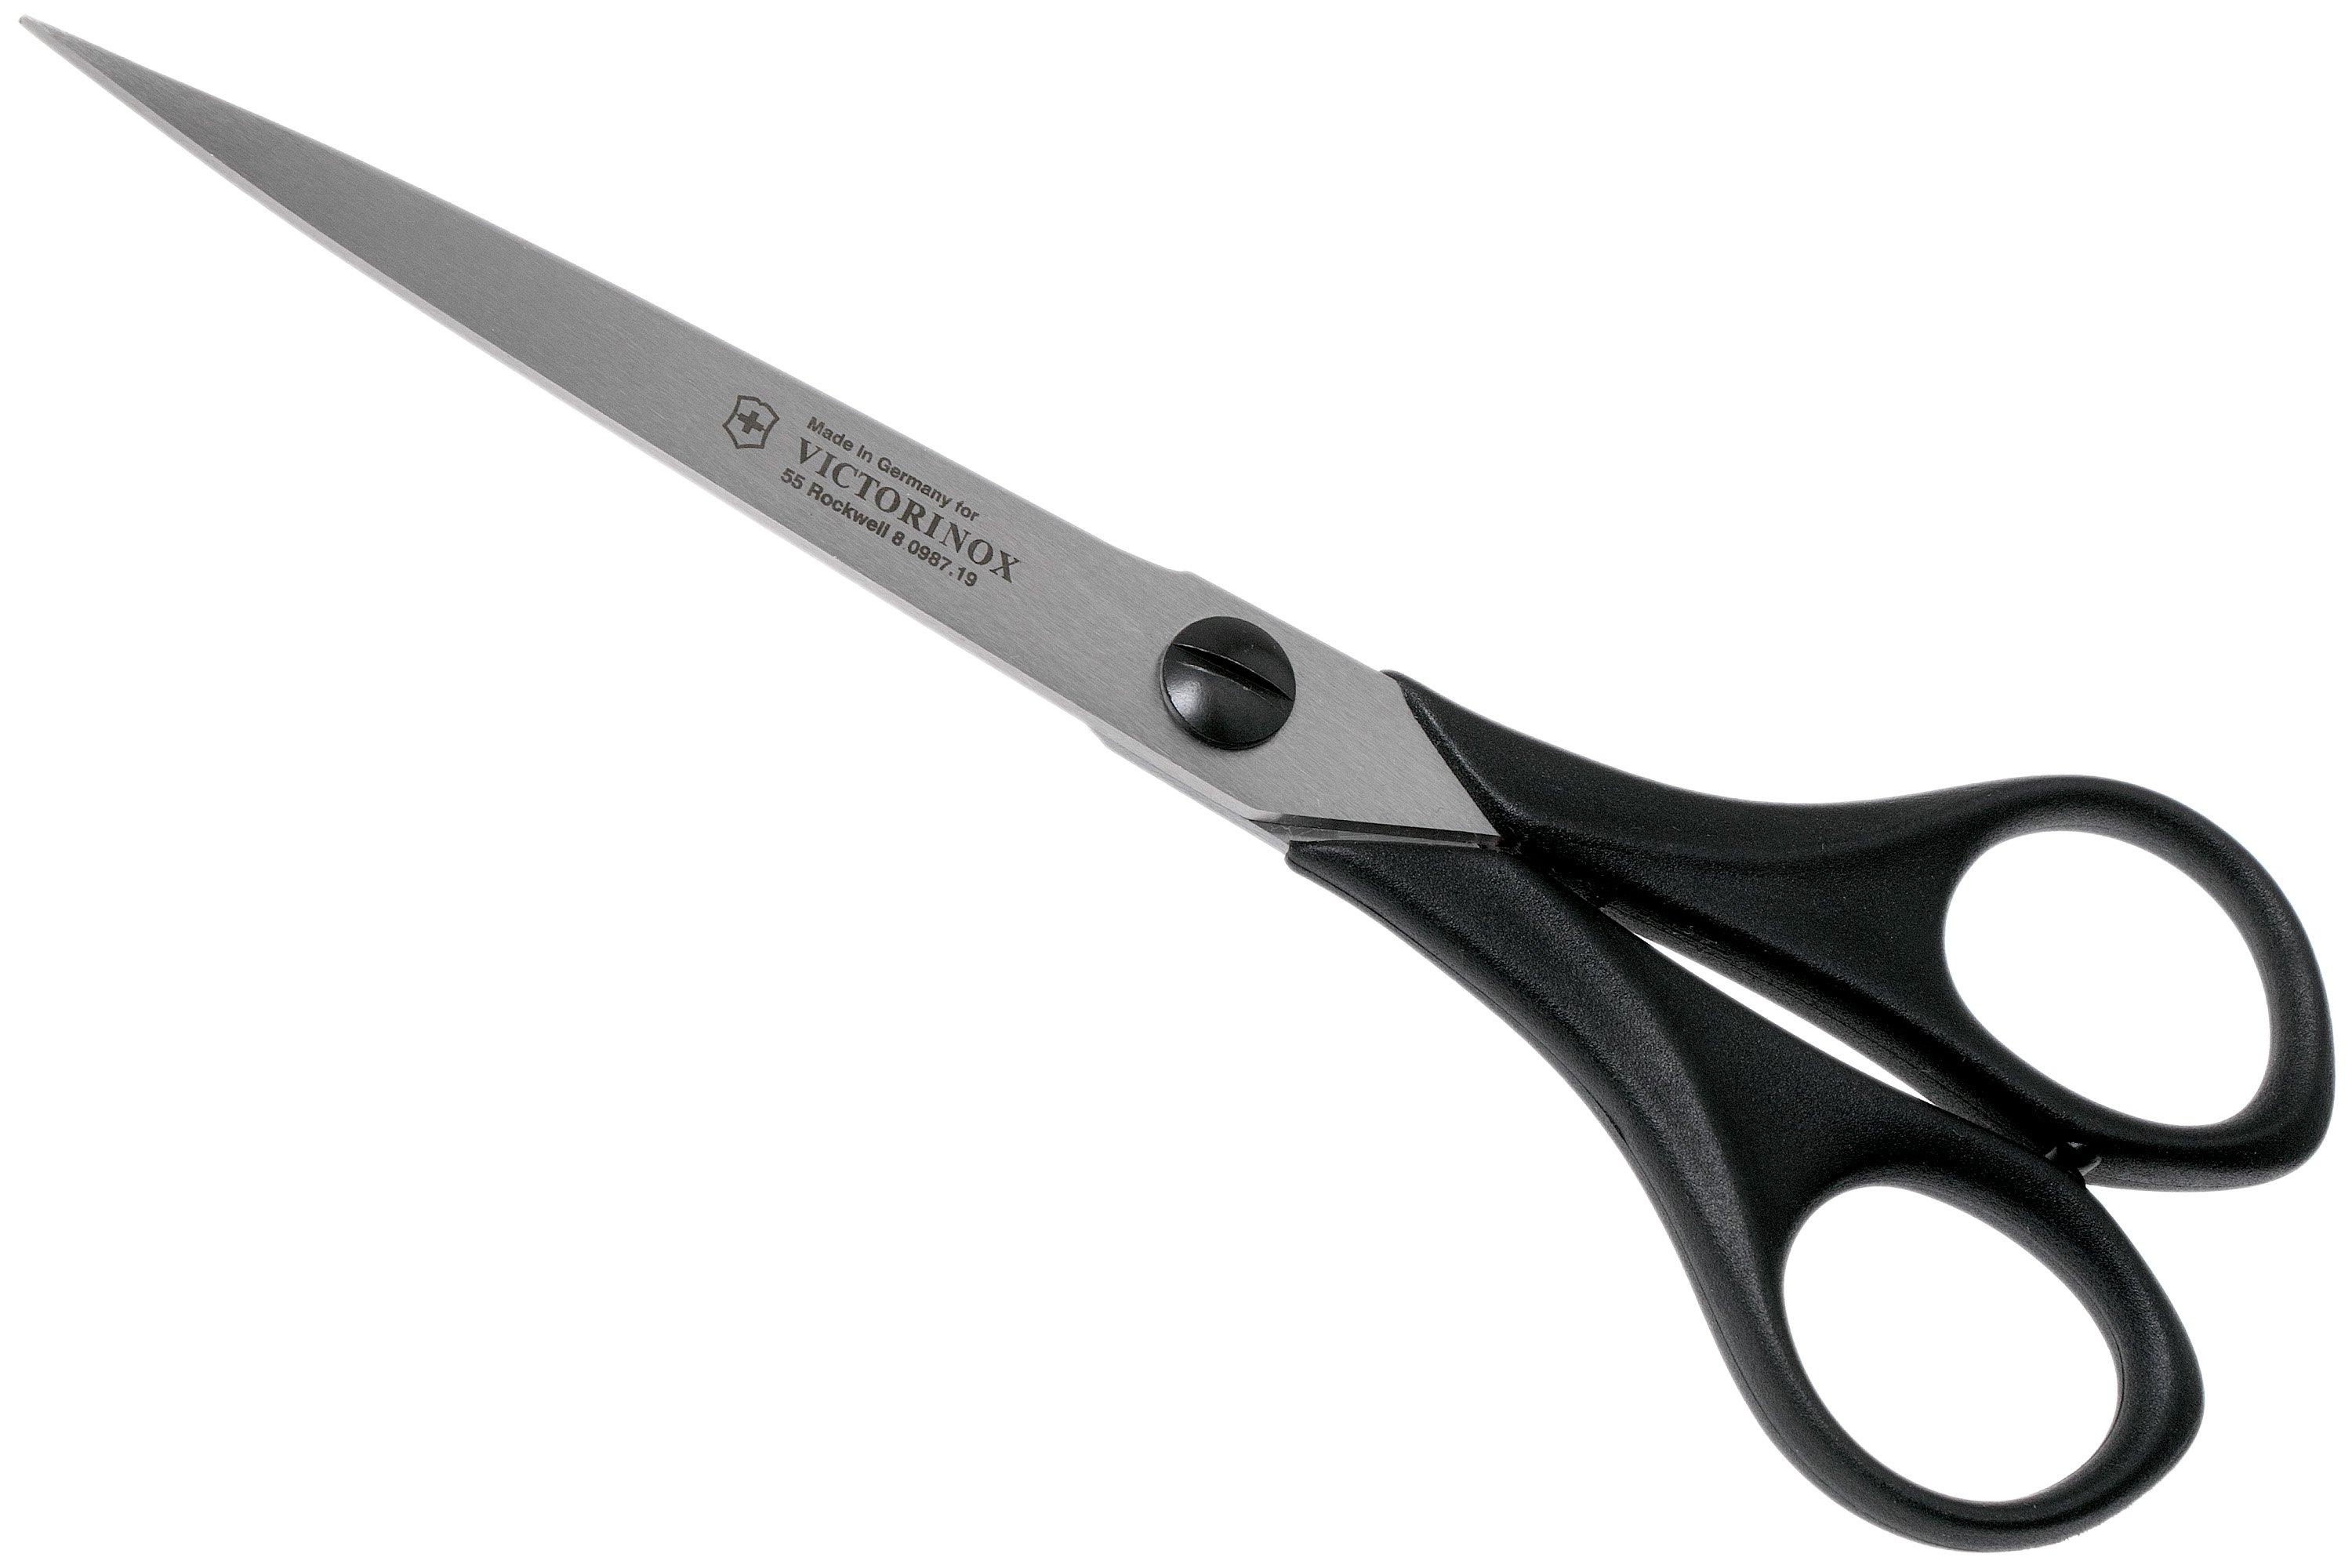 Victorinox 8.0987.19 household scissors 18 cm | Advantageously shopping at | Allzweckscheren